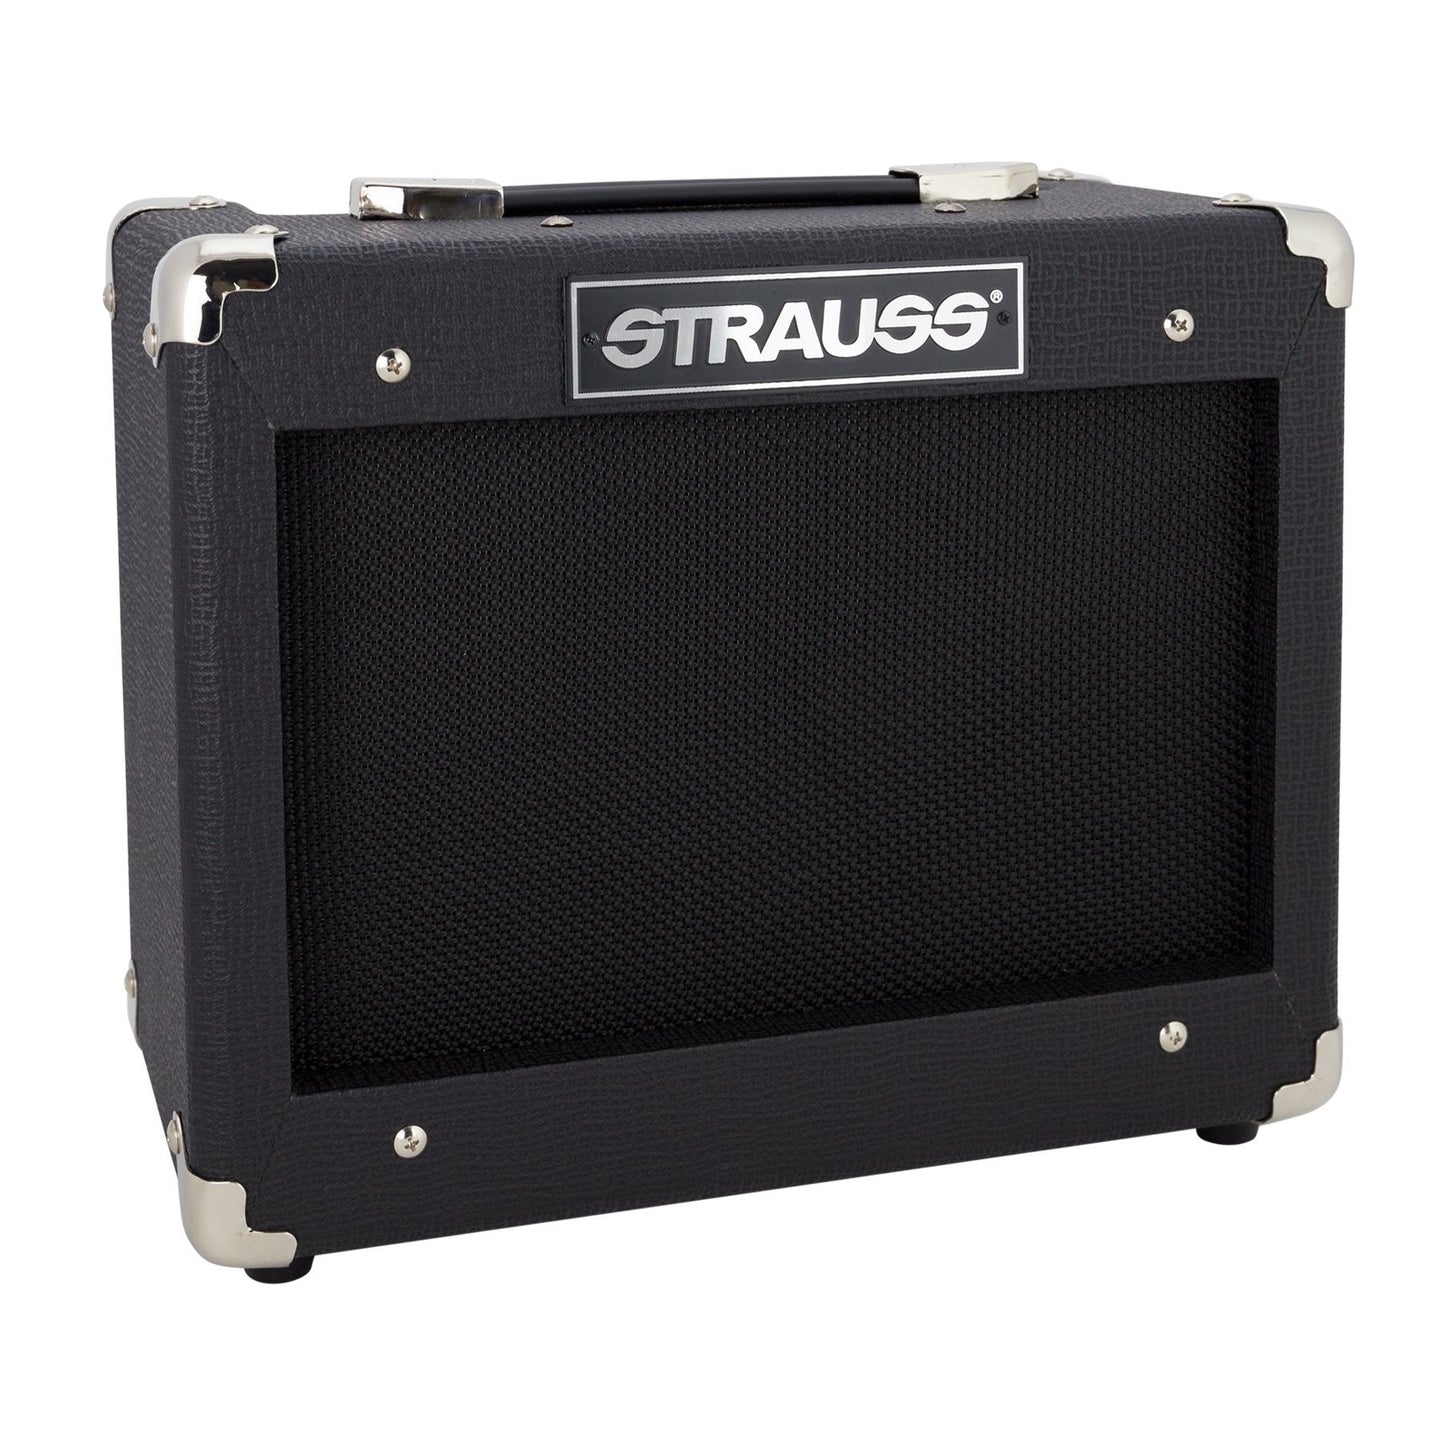 Strauss 'Legacy' 15 Watt Solid State Guitar Practice Amplifier (Black)